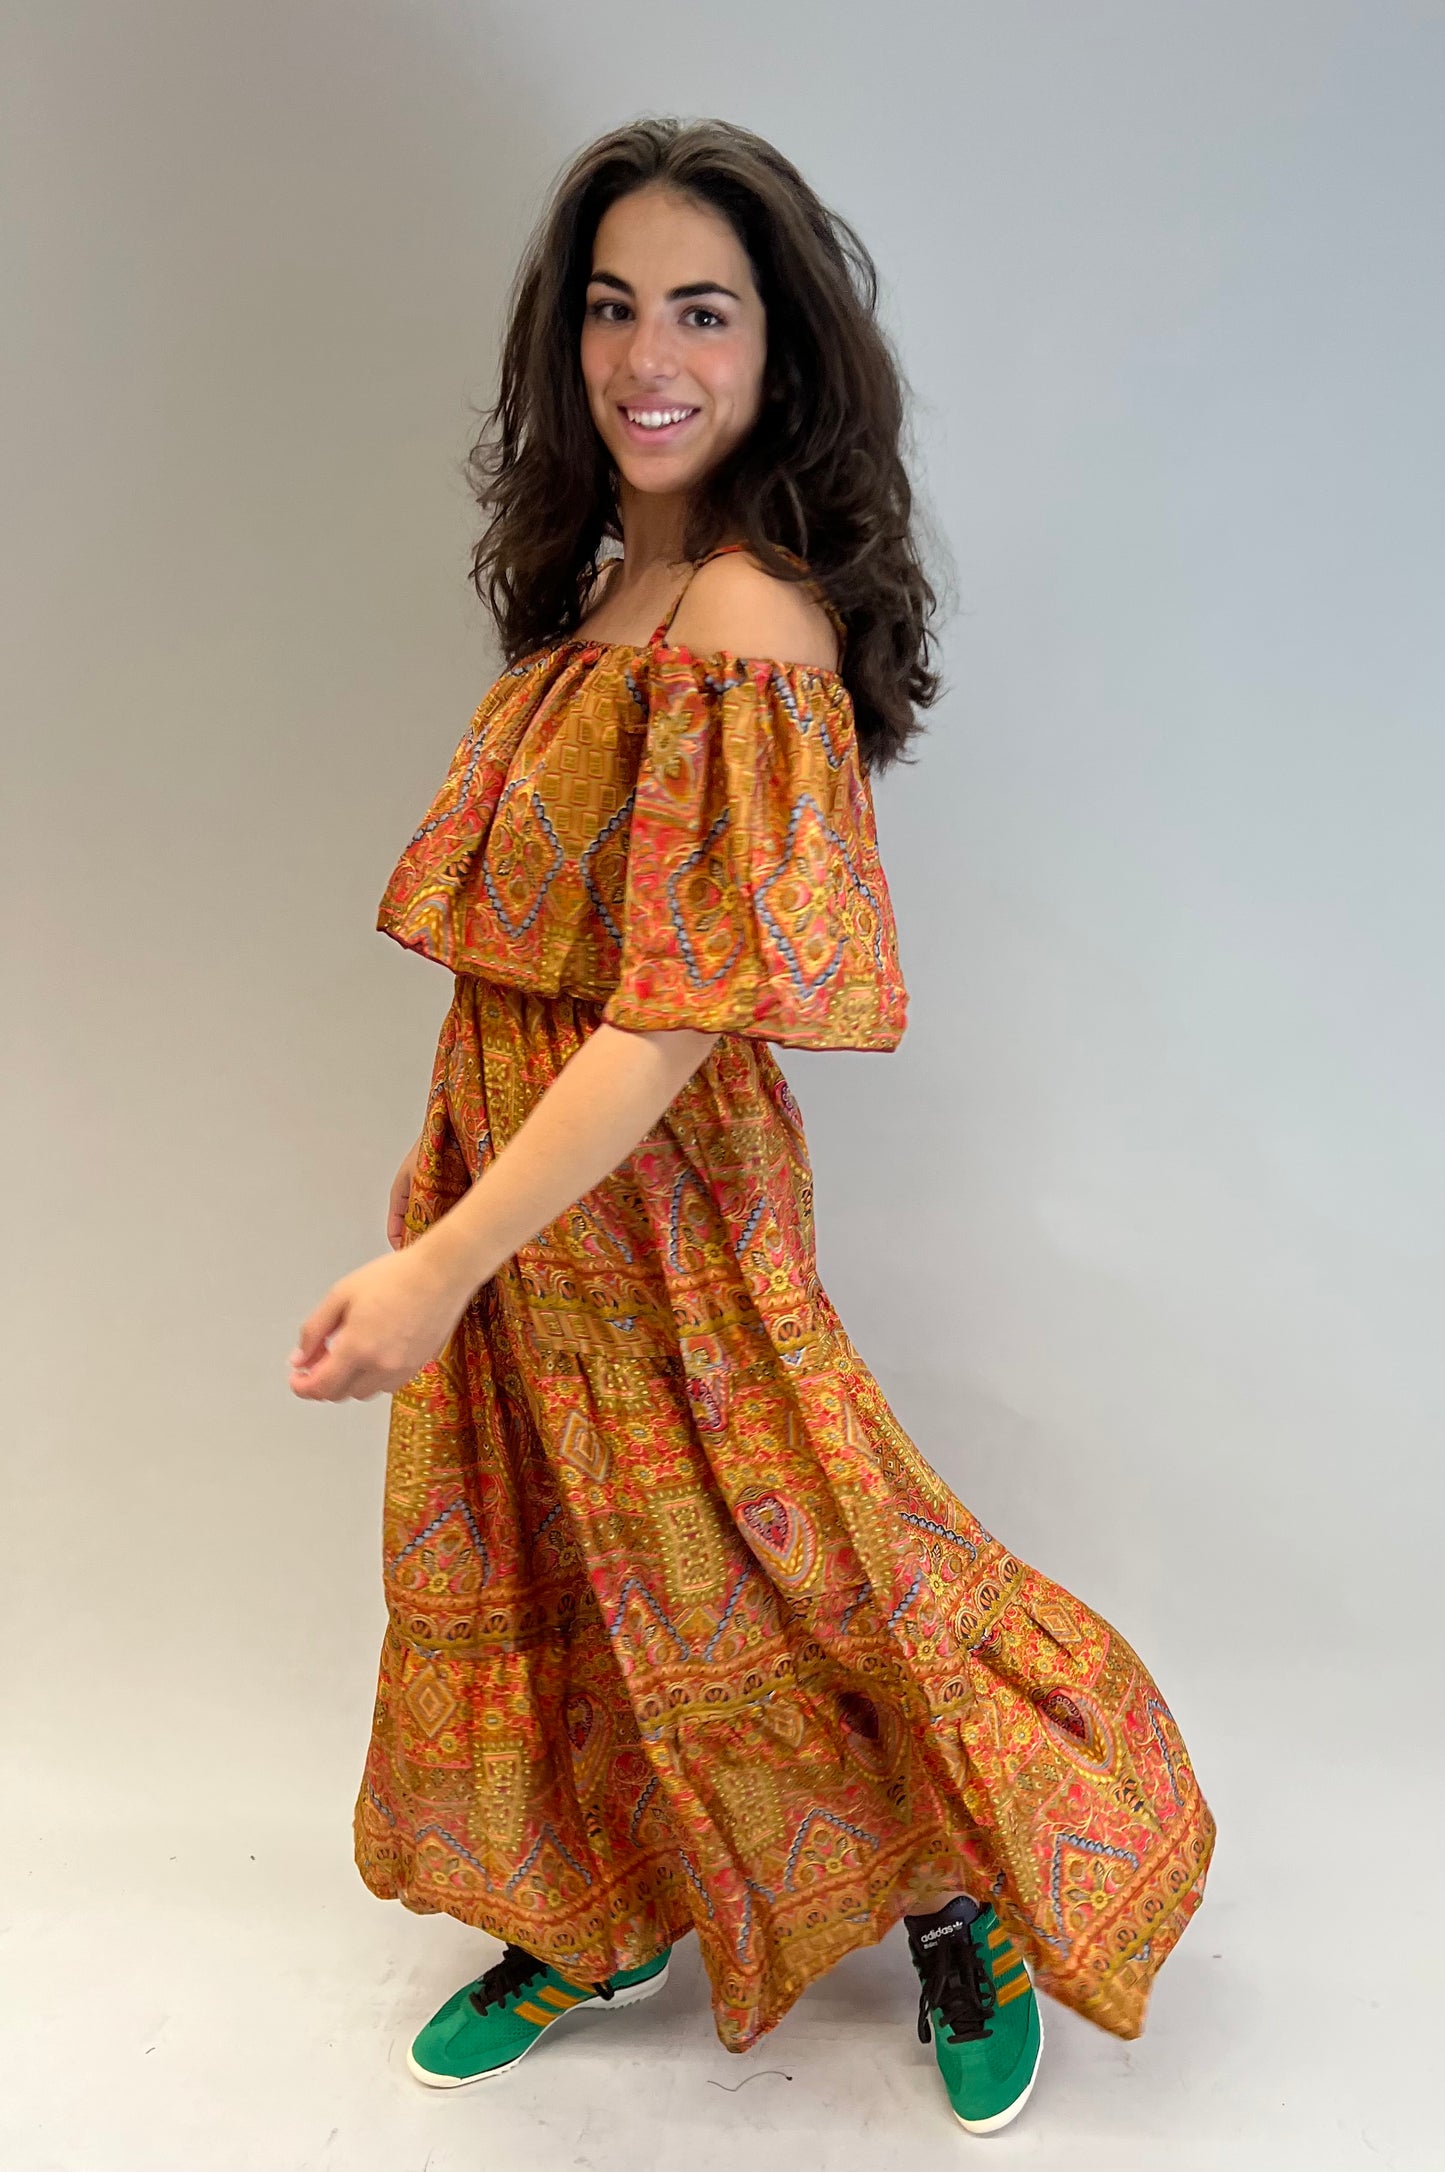 Amelie gold silk maxi dress: UK size 8-16